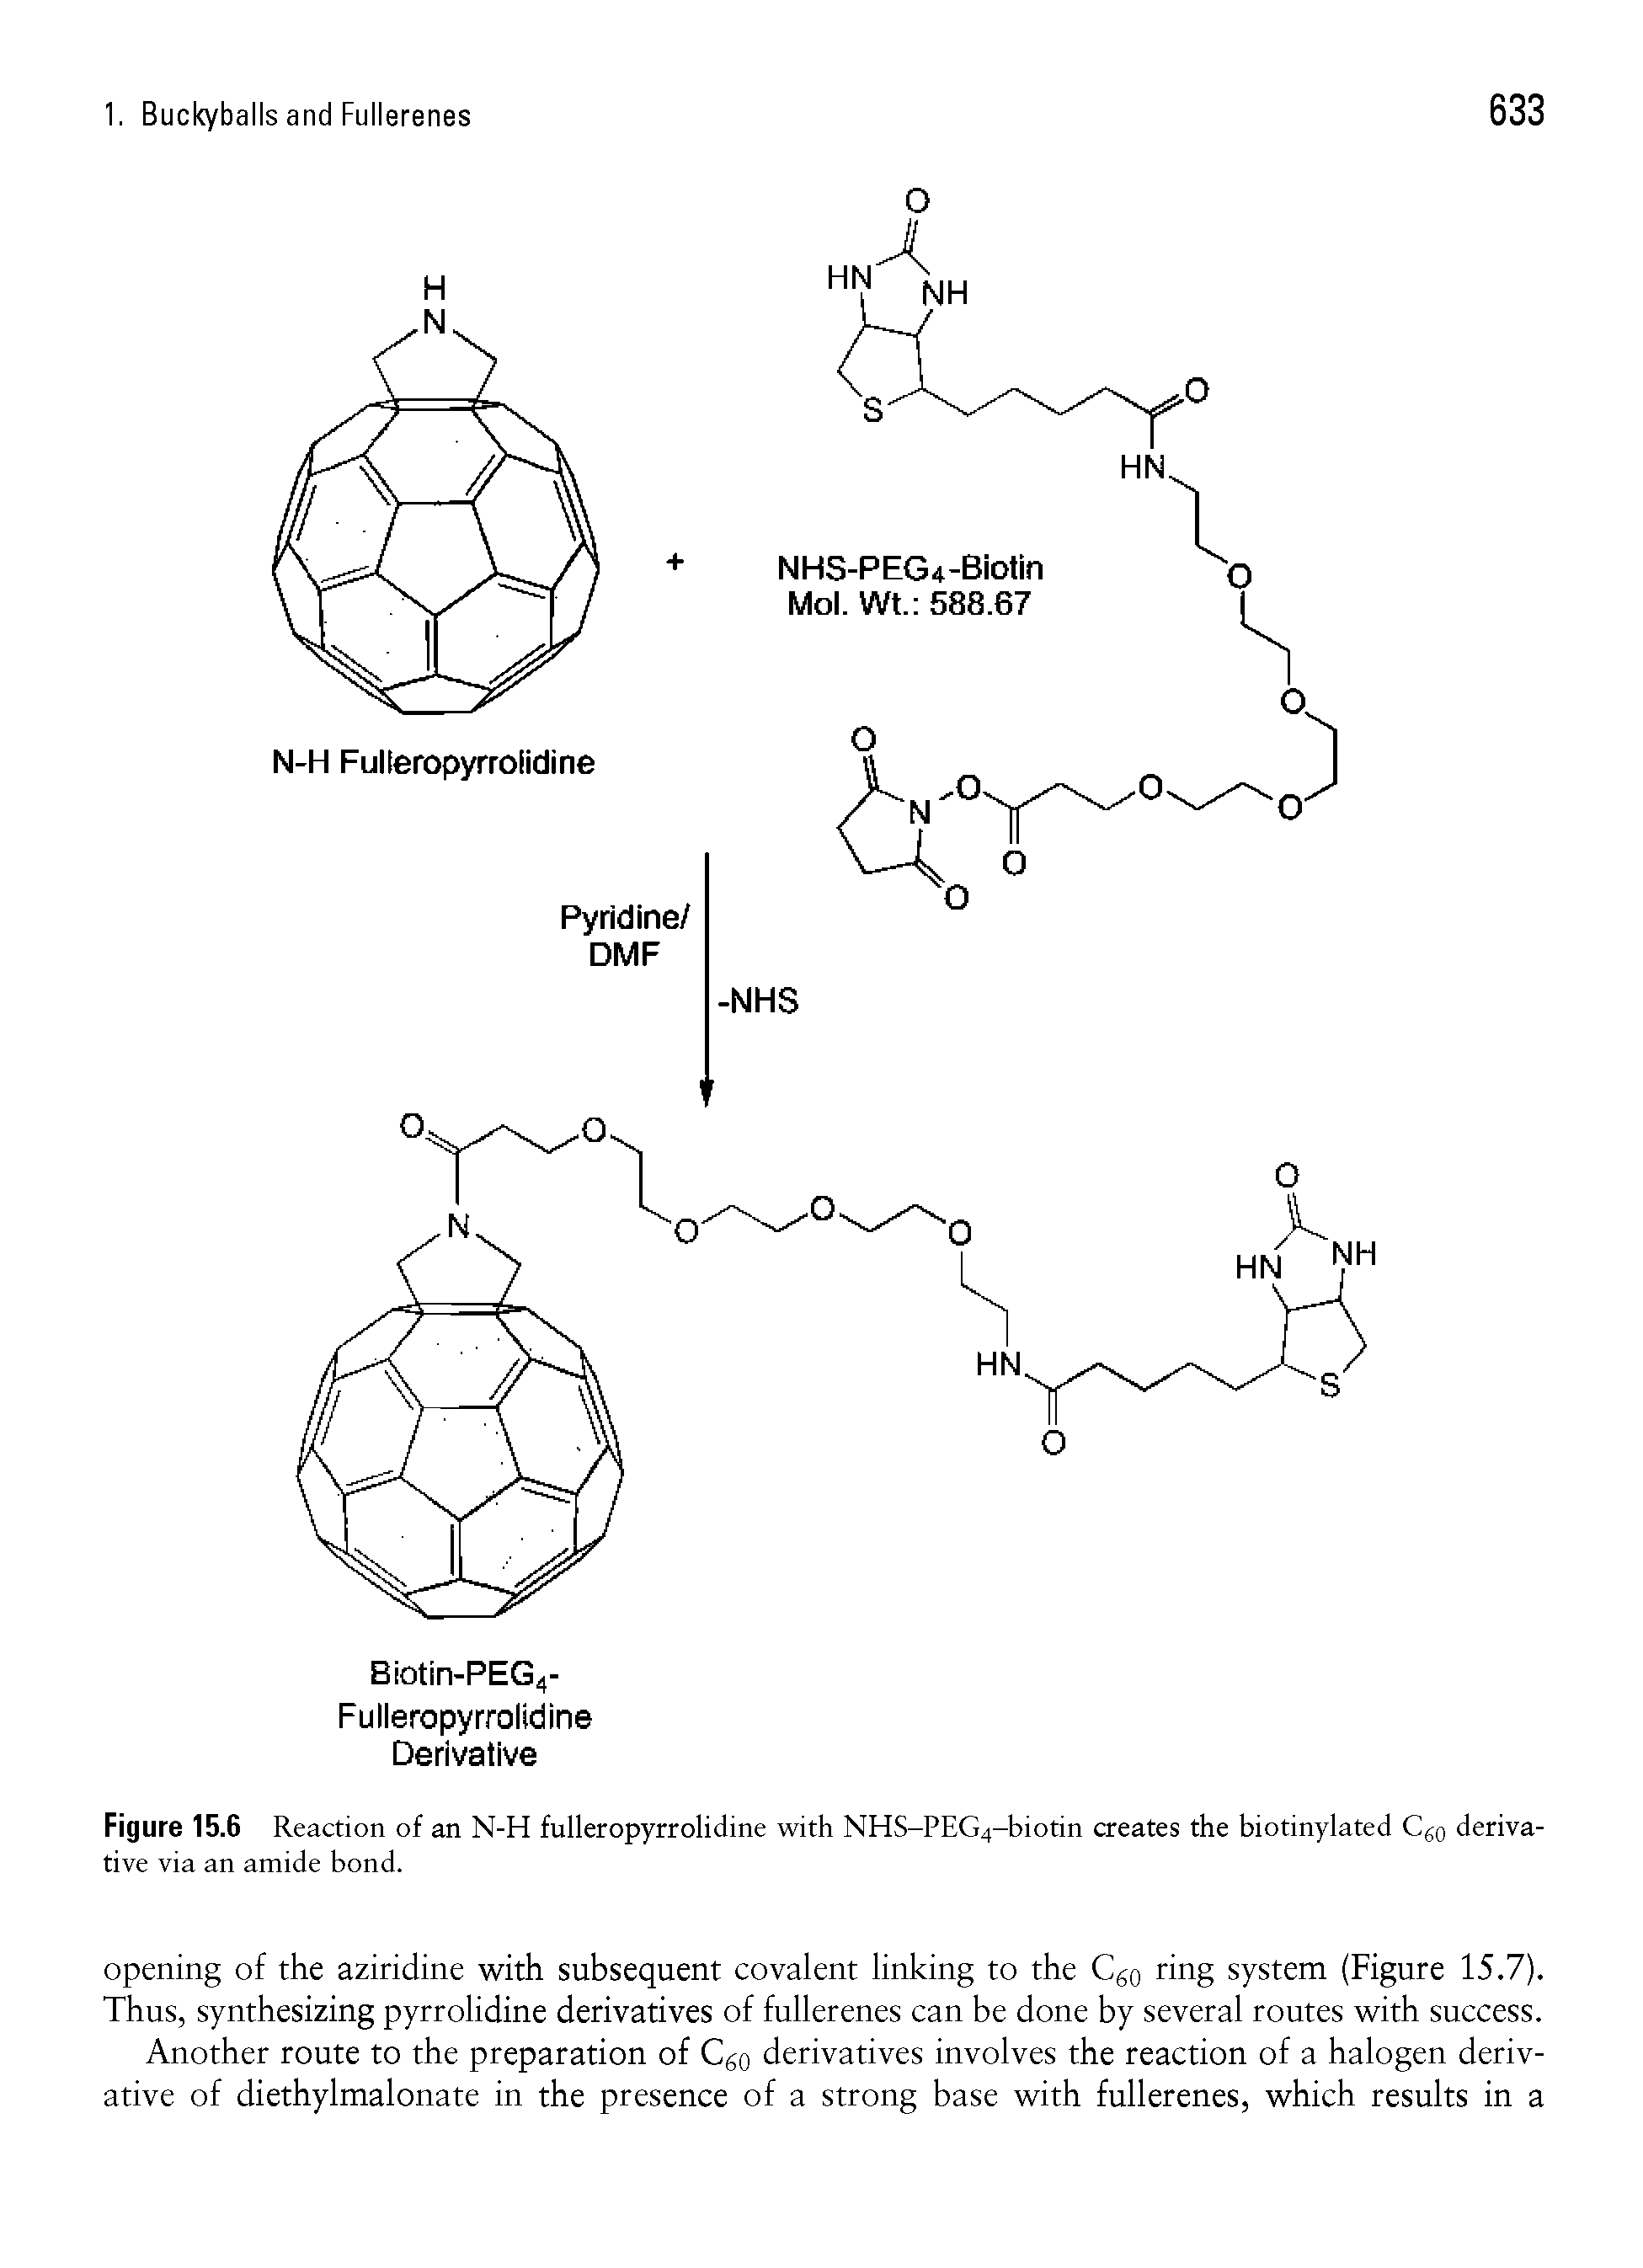 Figure 15.6 Reaction of an N-H fulleropyrrolidine with NHS-PEG4-biotin creates the biotinylated C60 derivative via an amide bond.